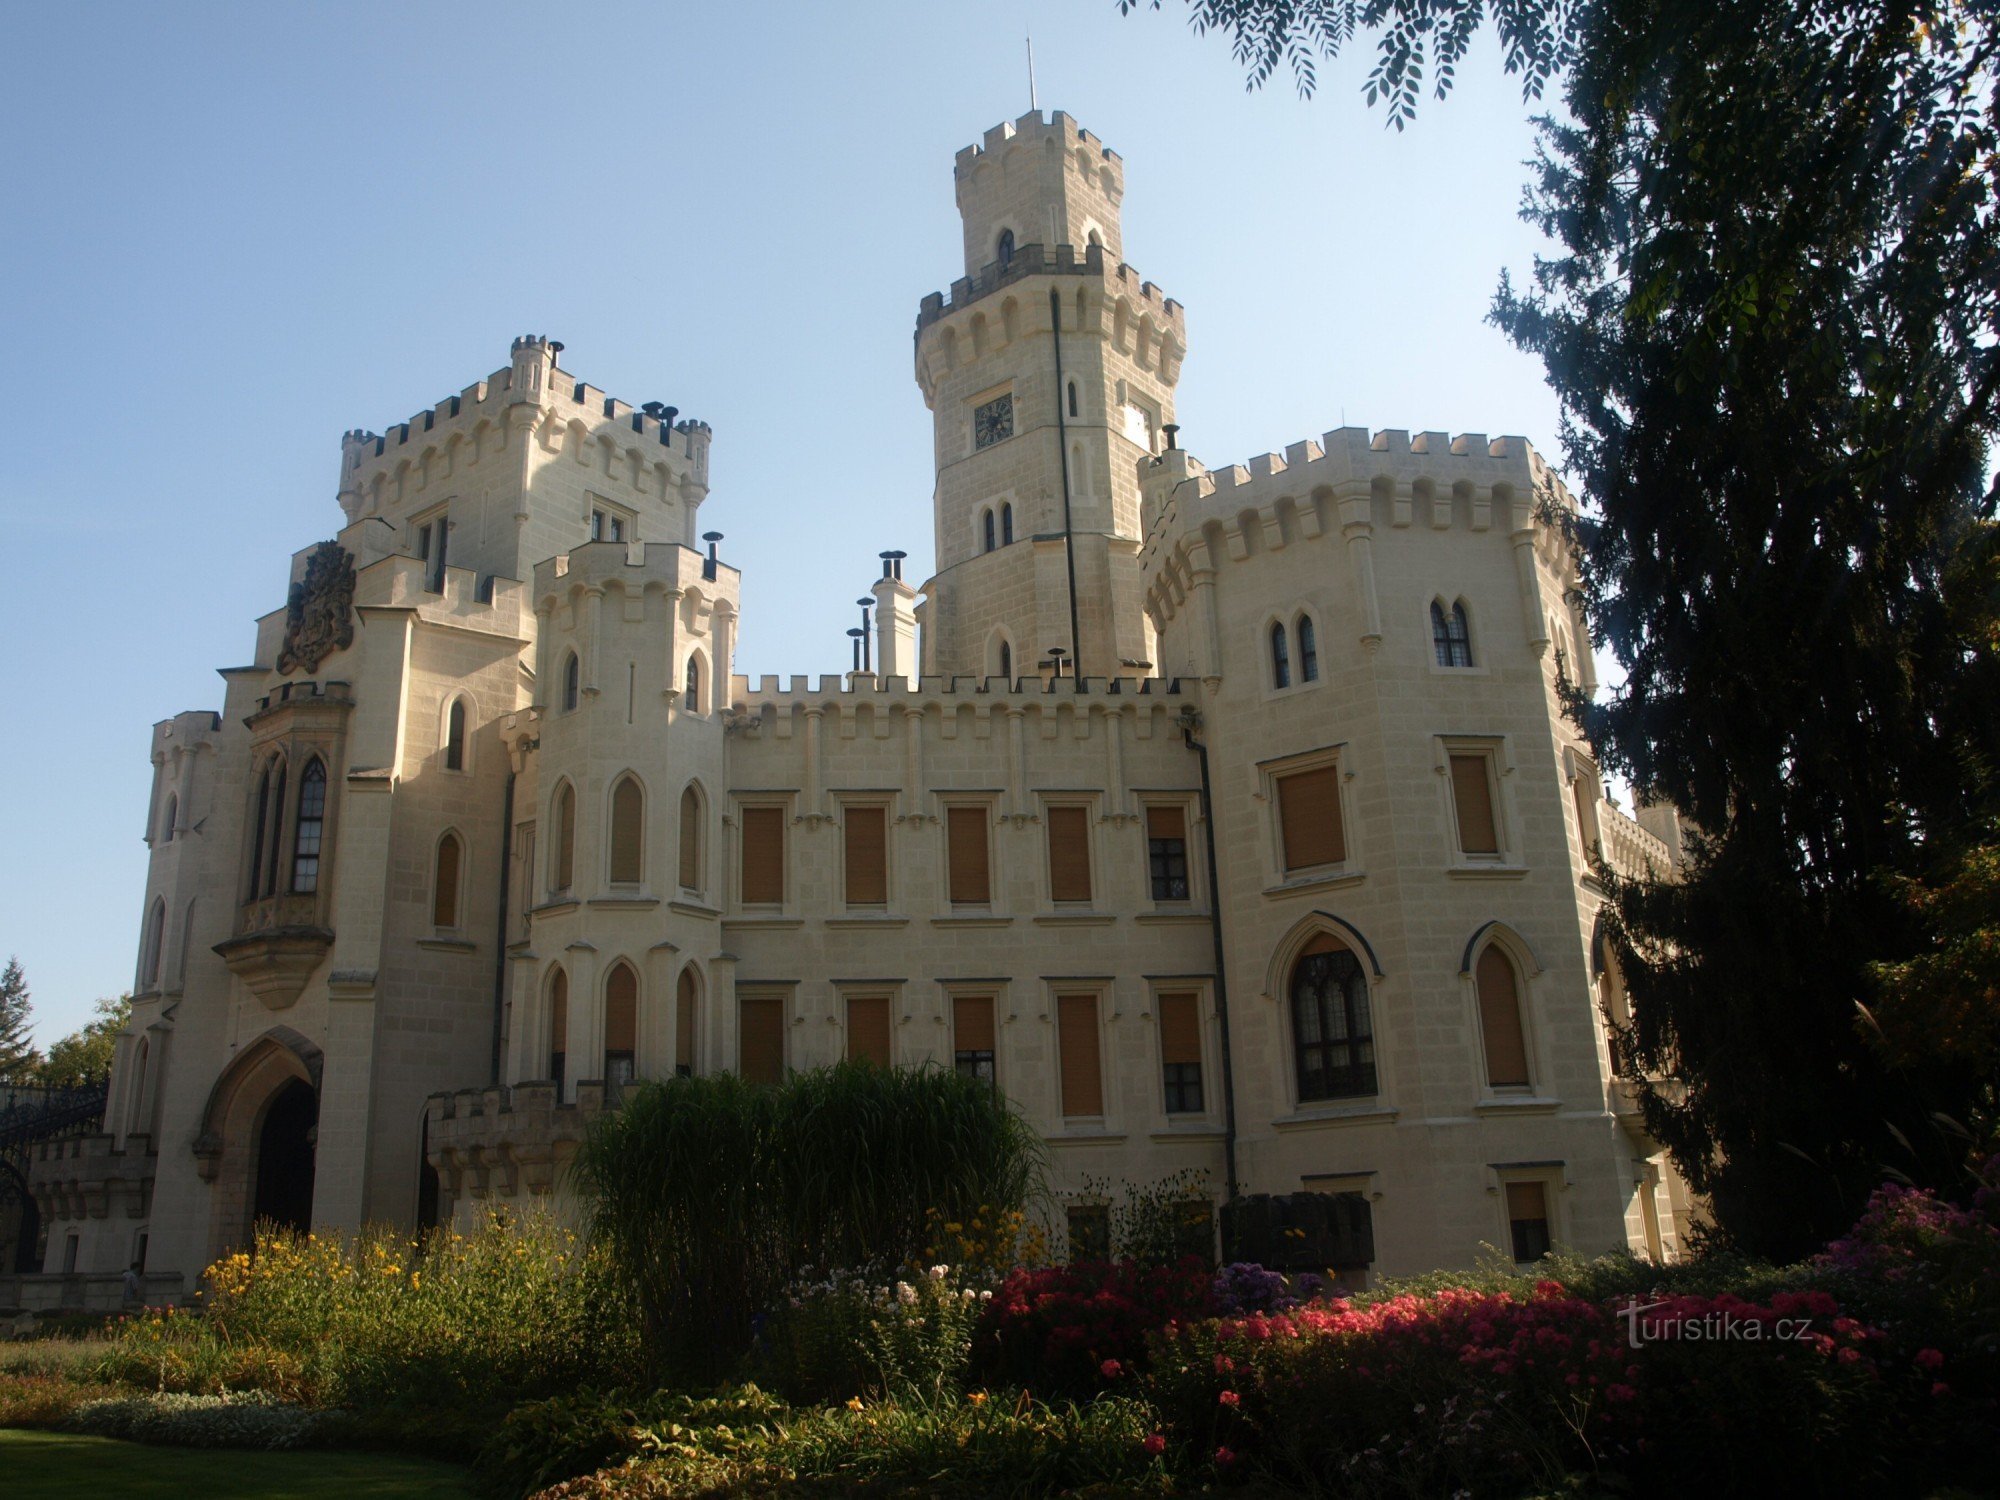 Castelo de Hluboká nad Vltavou